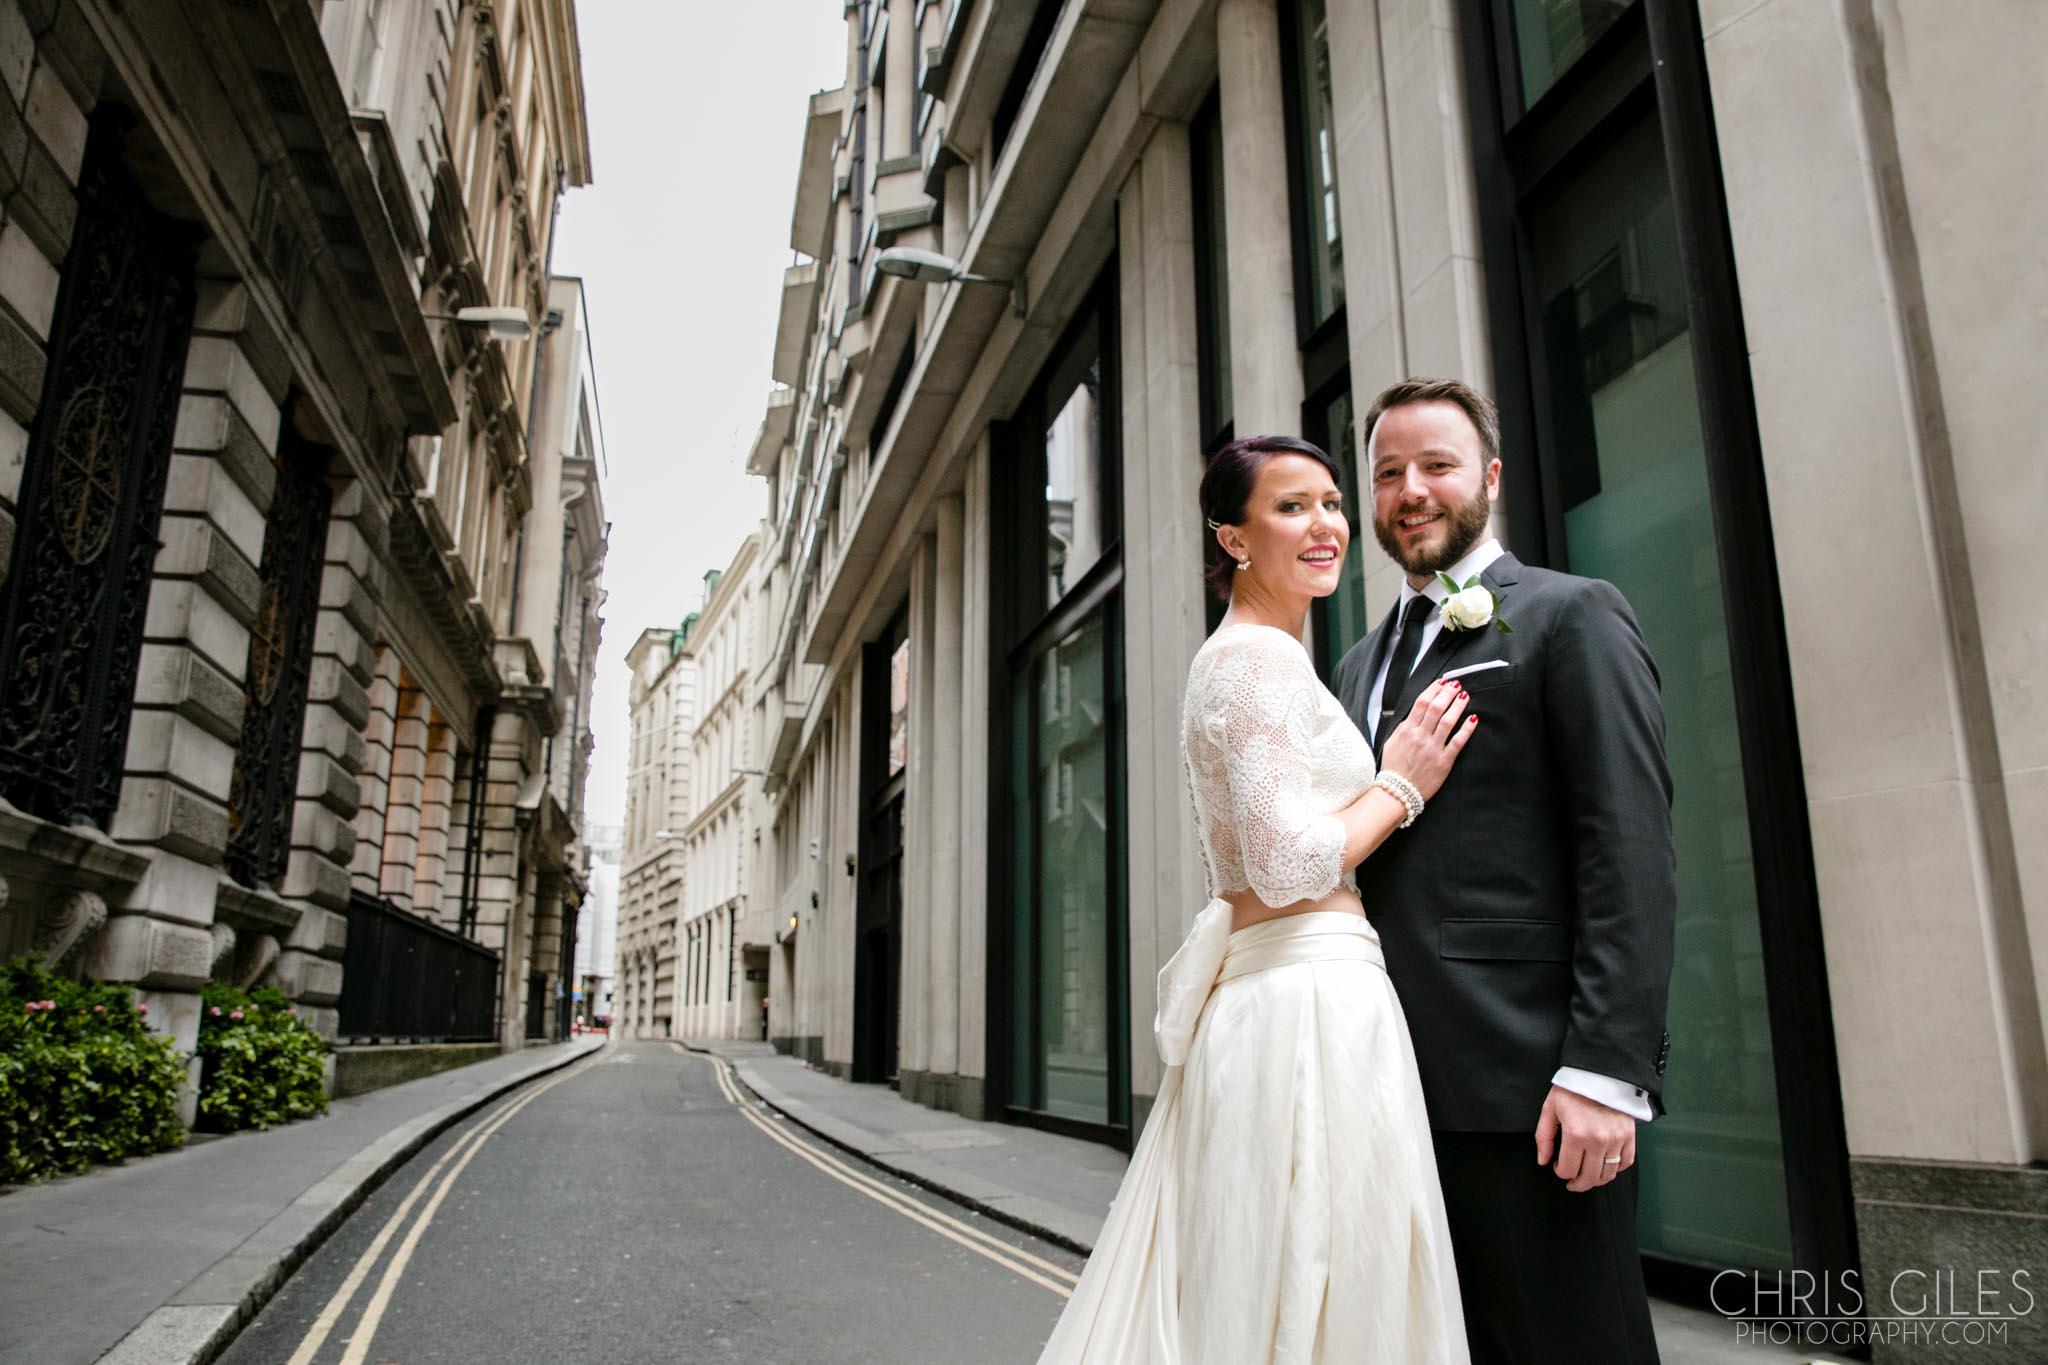 London Restaurant Wedding in Threadneedle Street